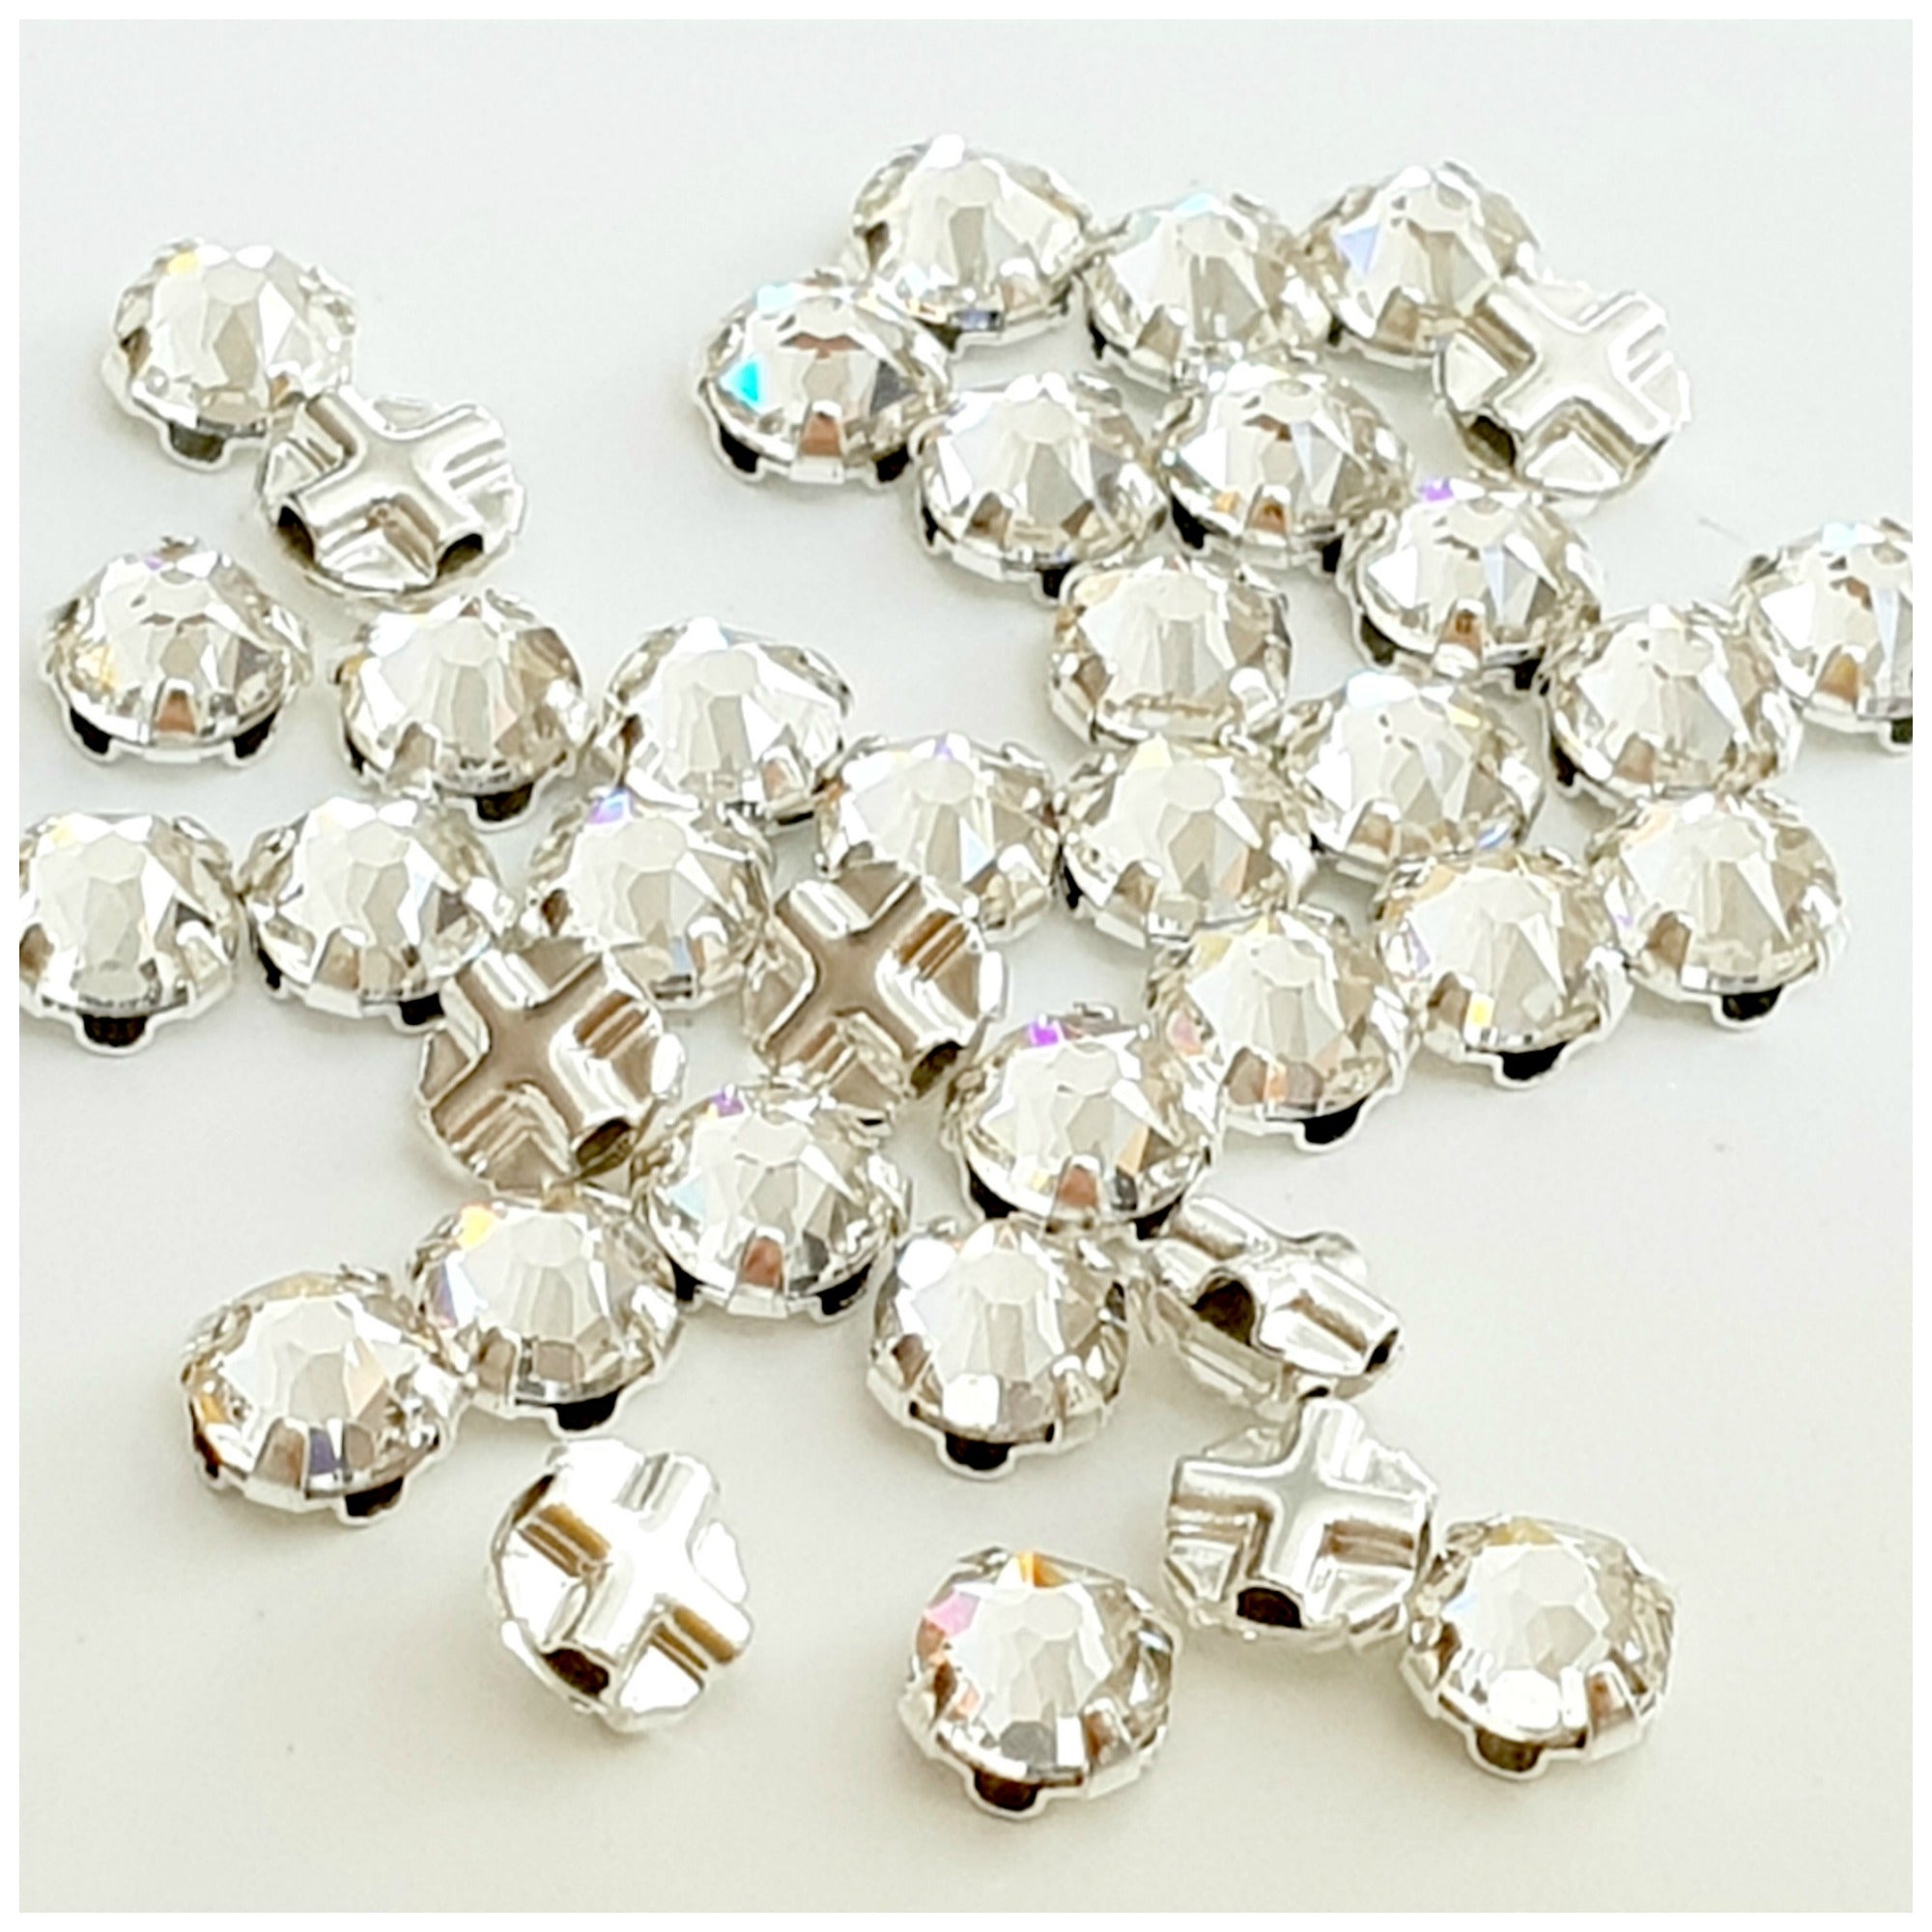 Oval Shaped Swarovski Sew on Crystal Beads - 10x7mm